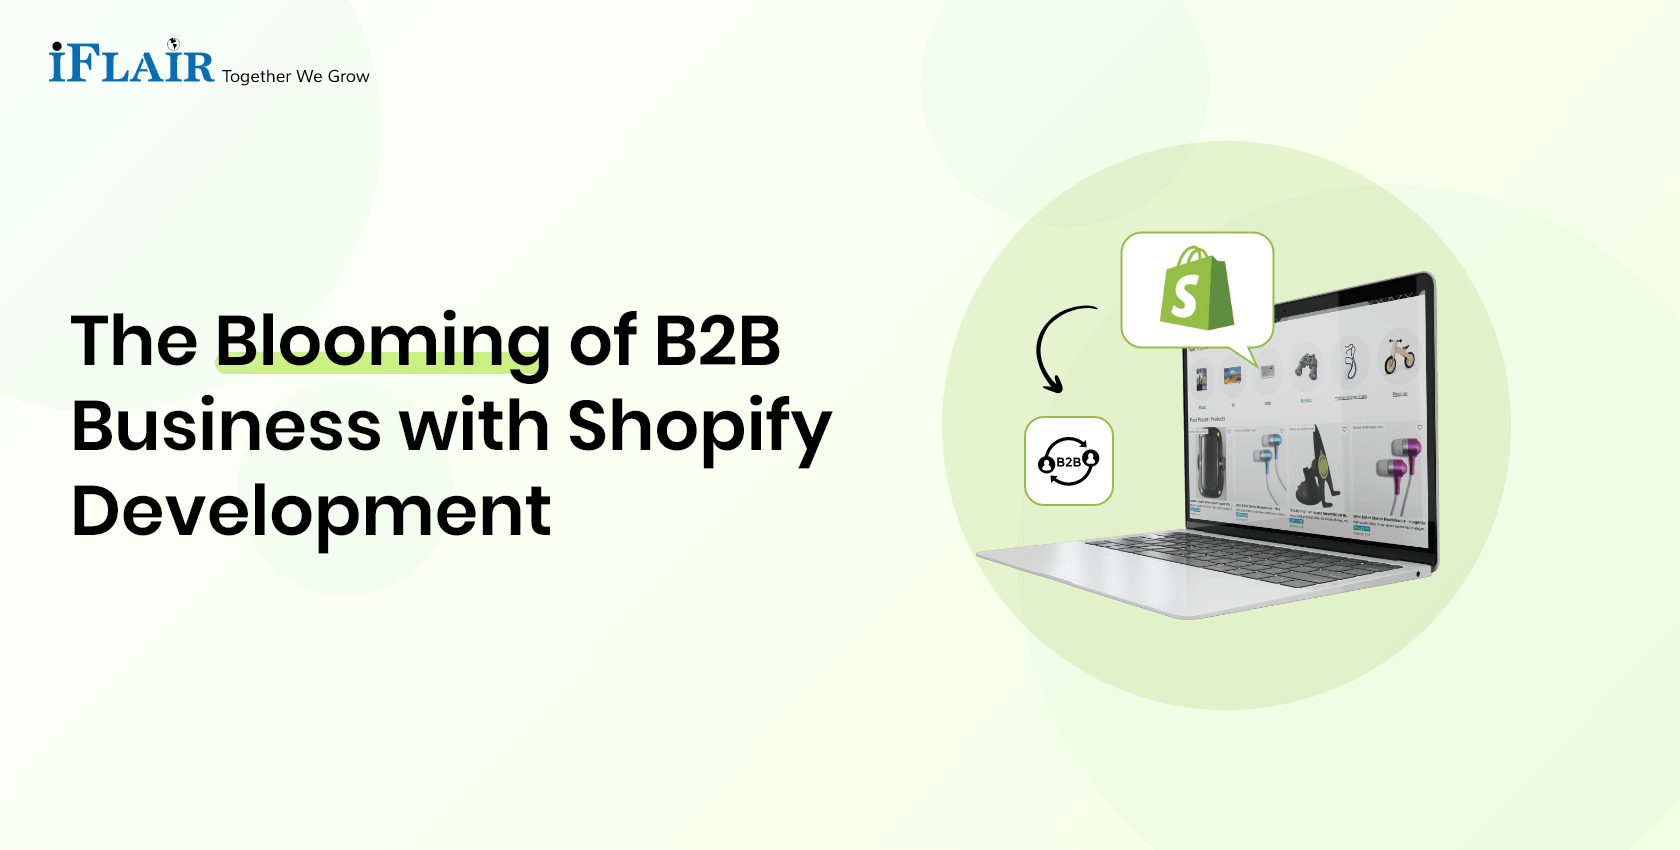 b2b business with shopify development